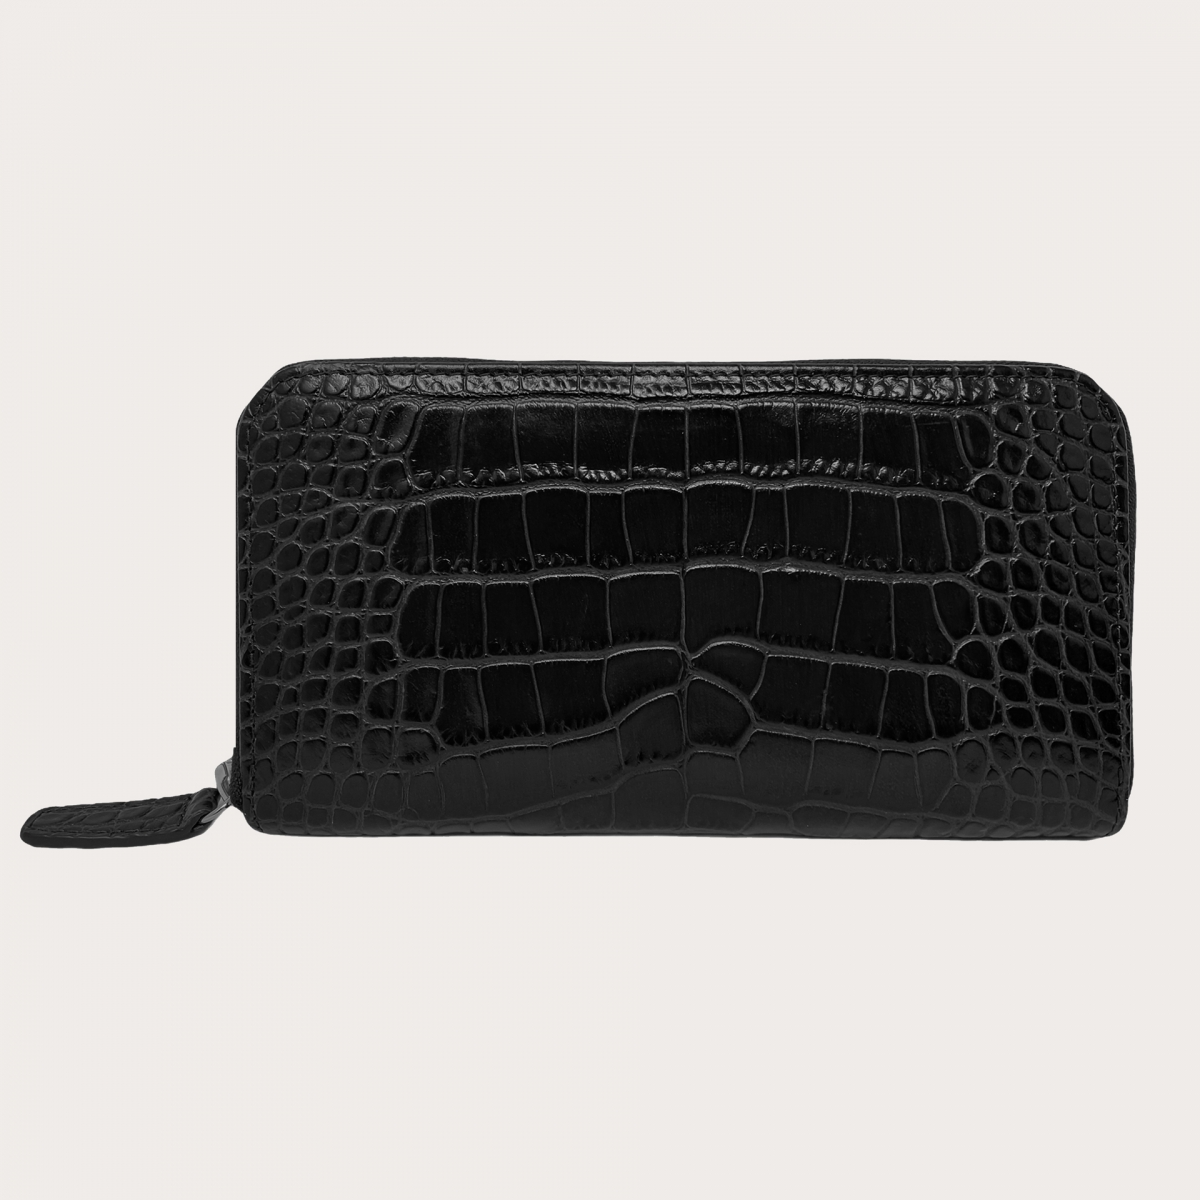 BRUCLE Refined black crocodile print women's wallet with zip